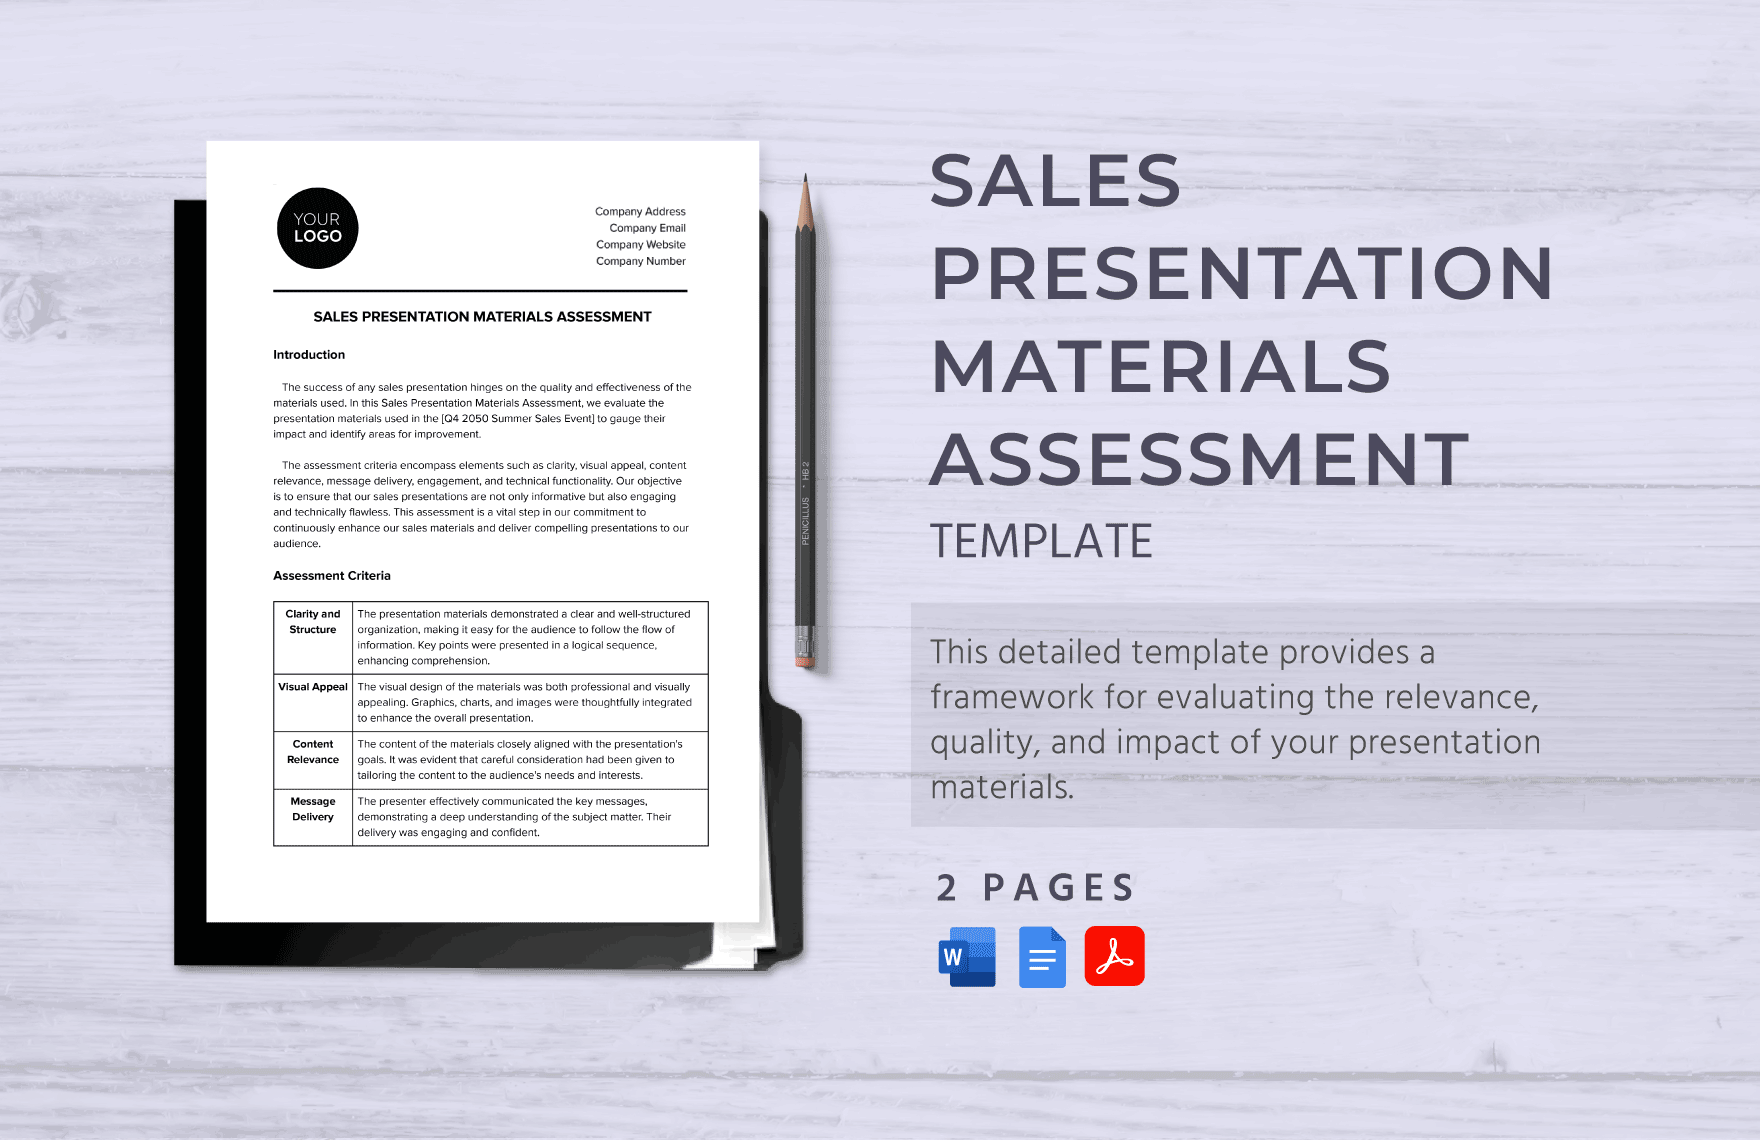 Sales Presentation Materials Assessment Template